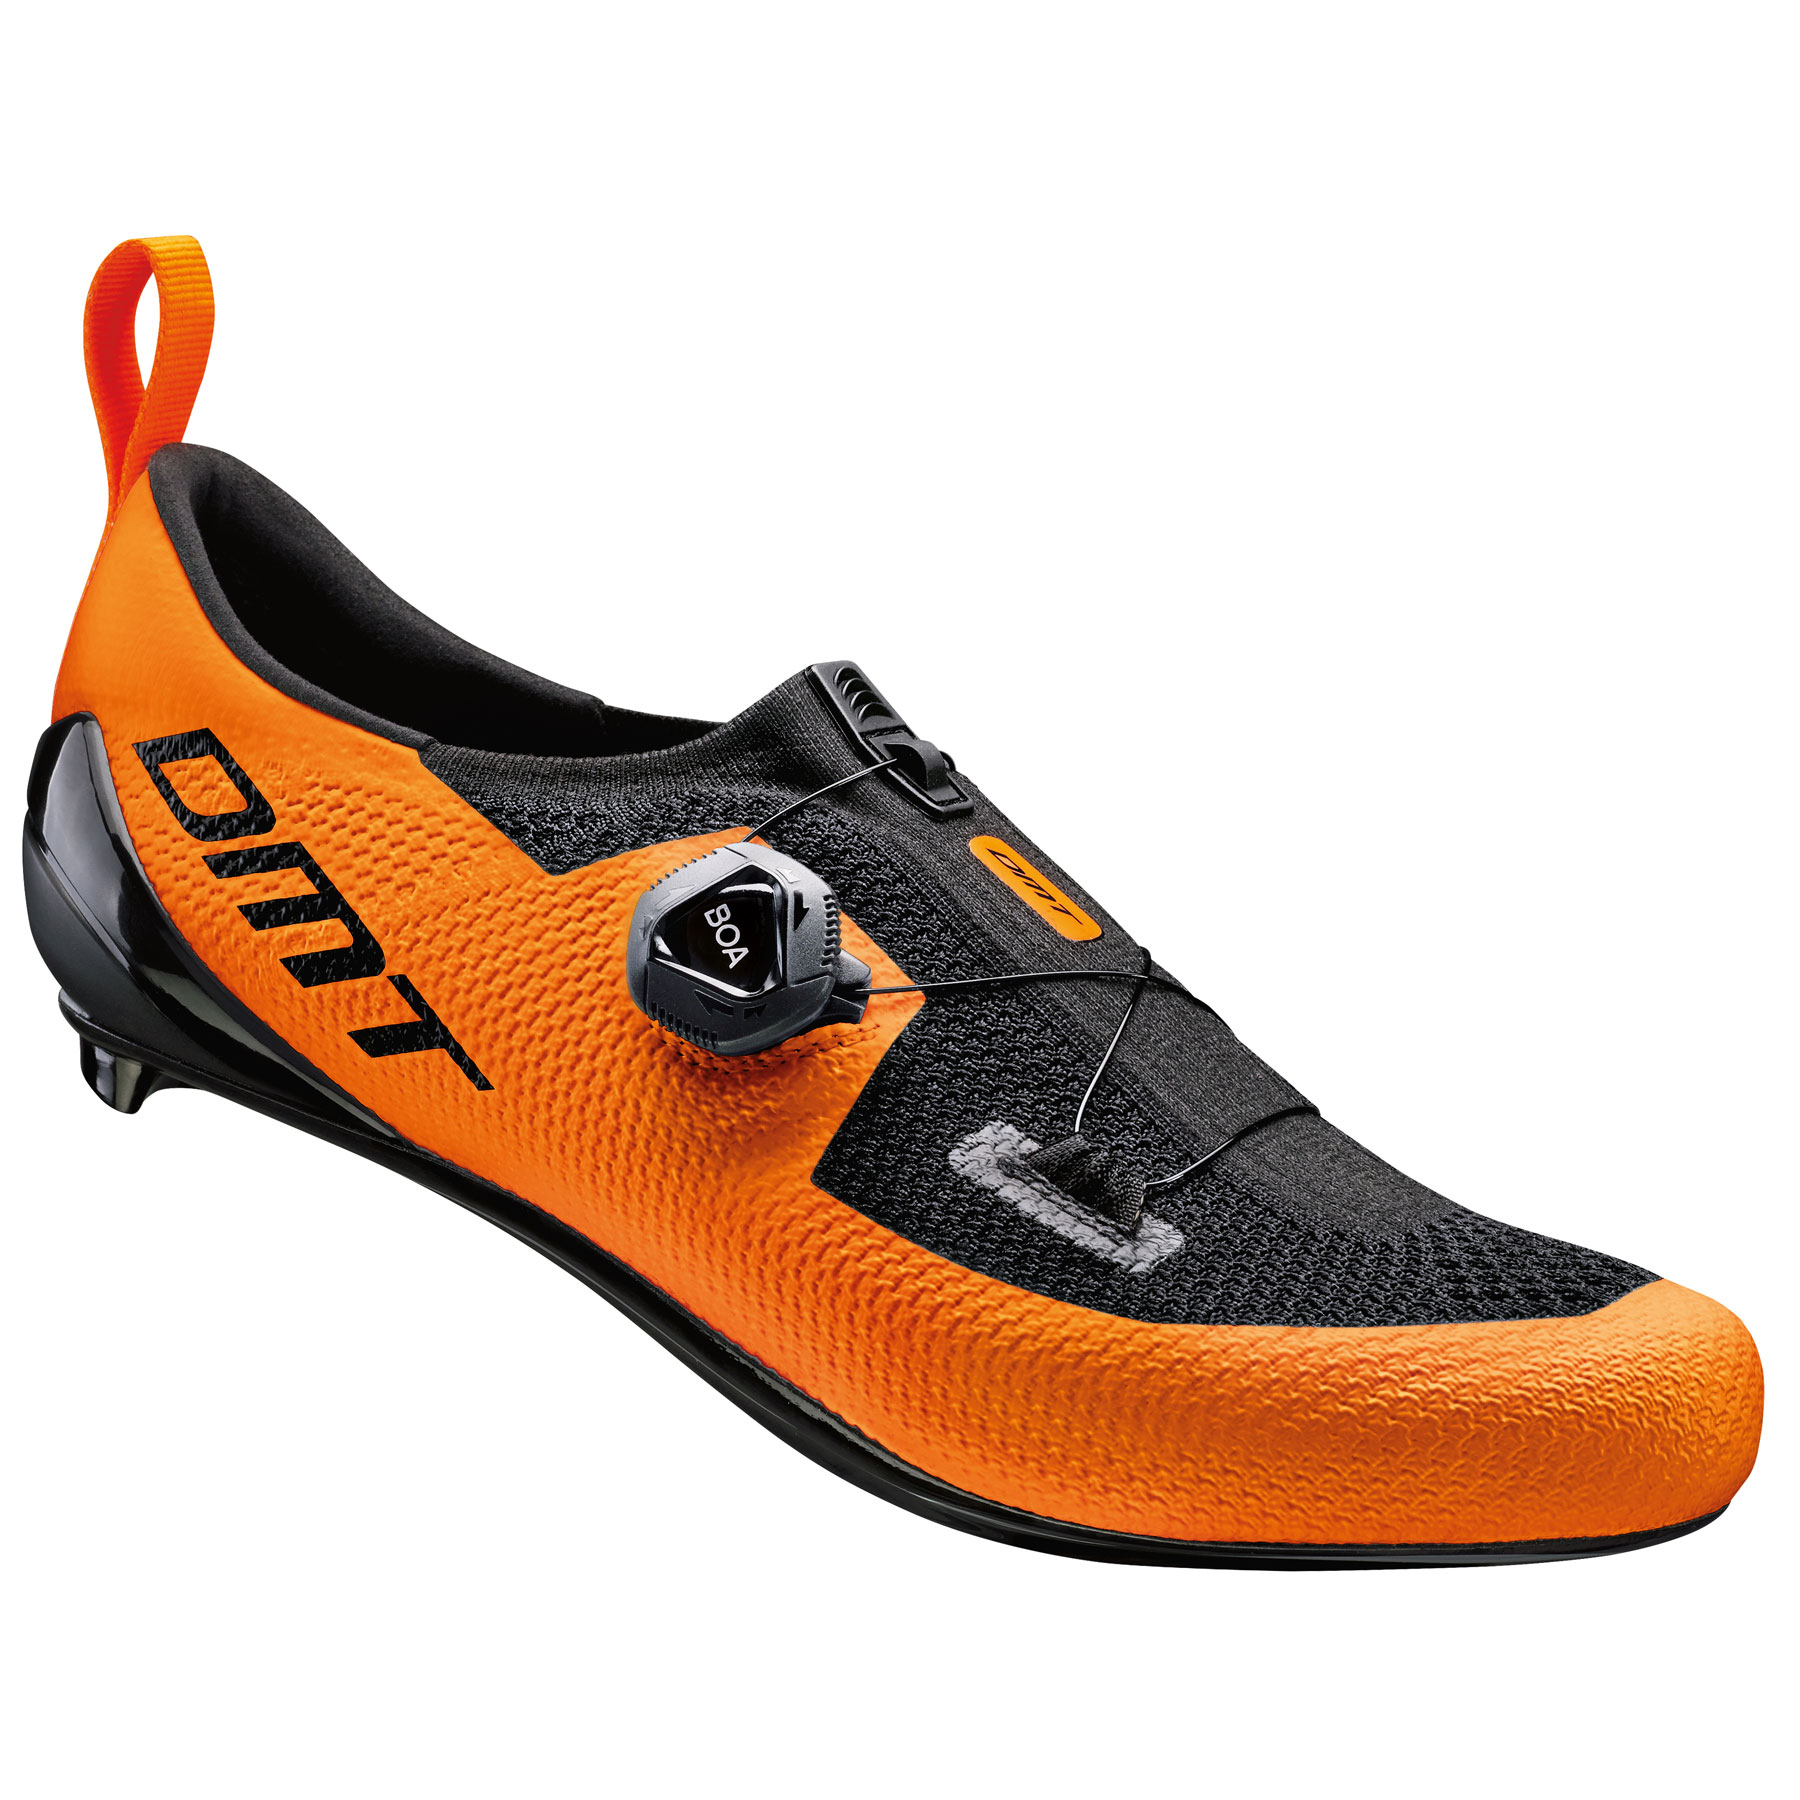 Picture of DMT KT1 Triathlon Shoe - orange/black